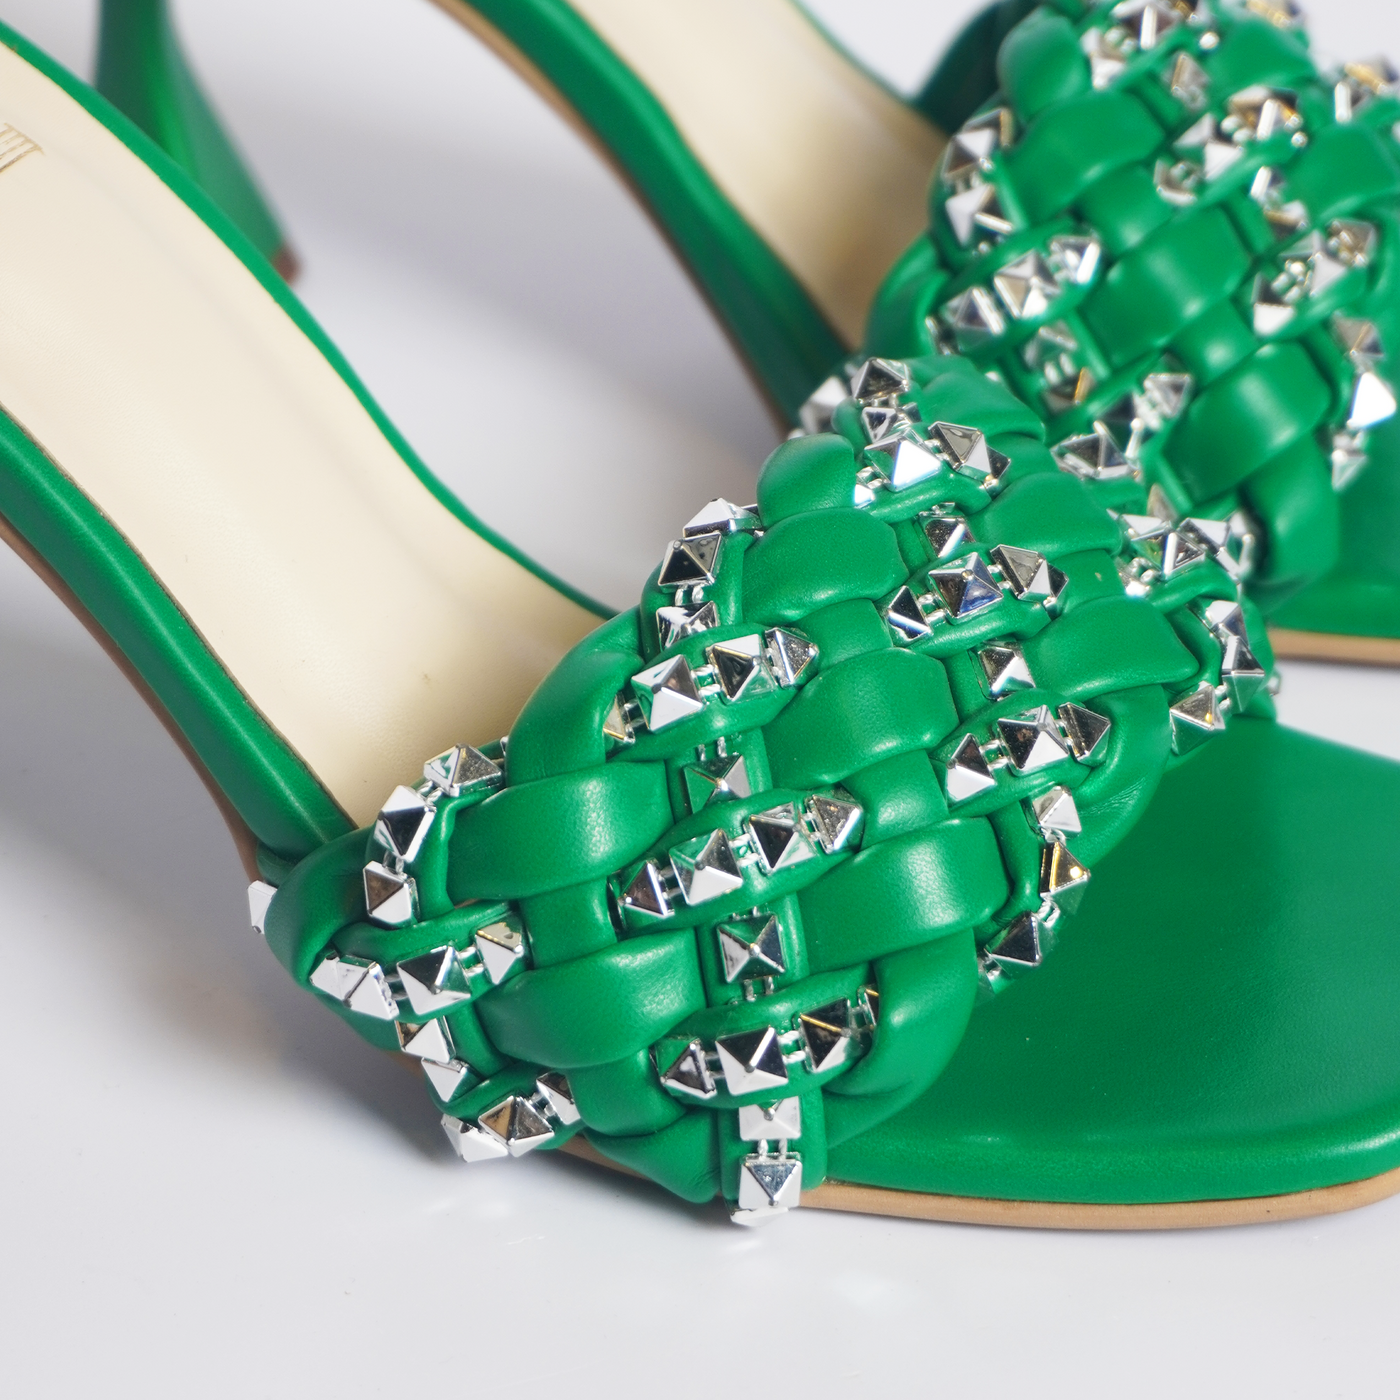 Green Braided Stud heels